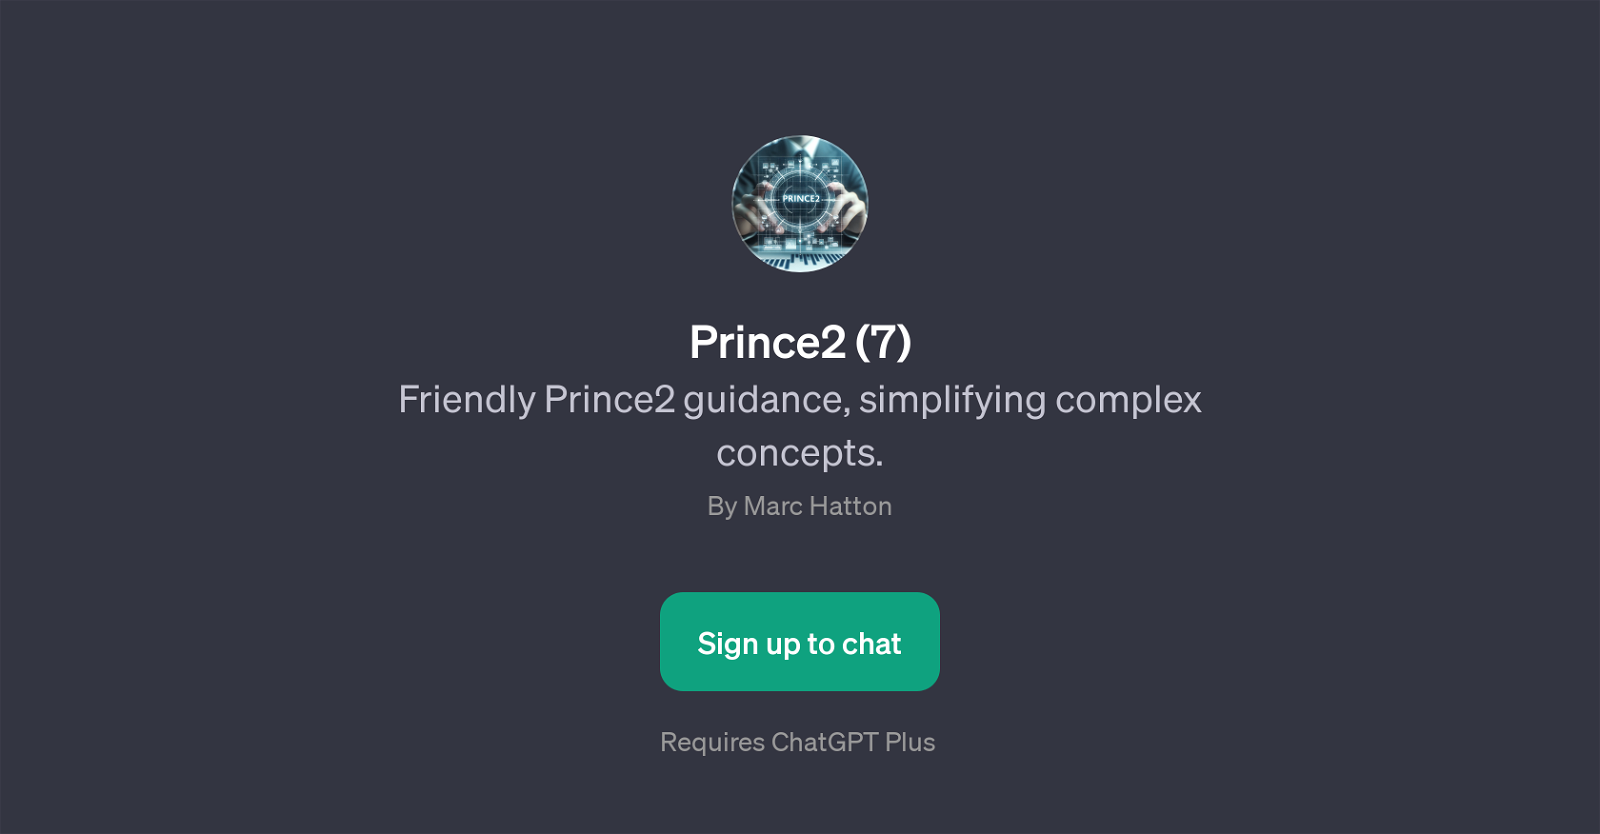 Prince2 (7) website